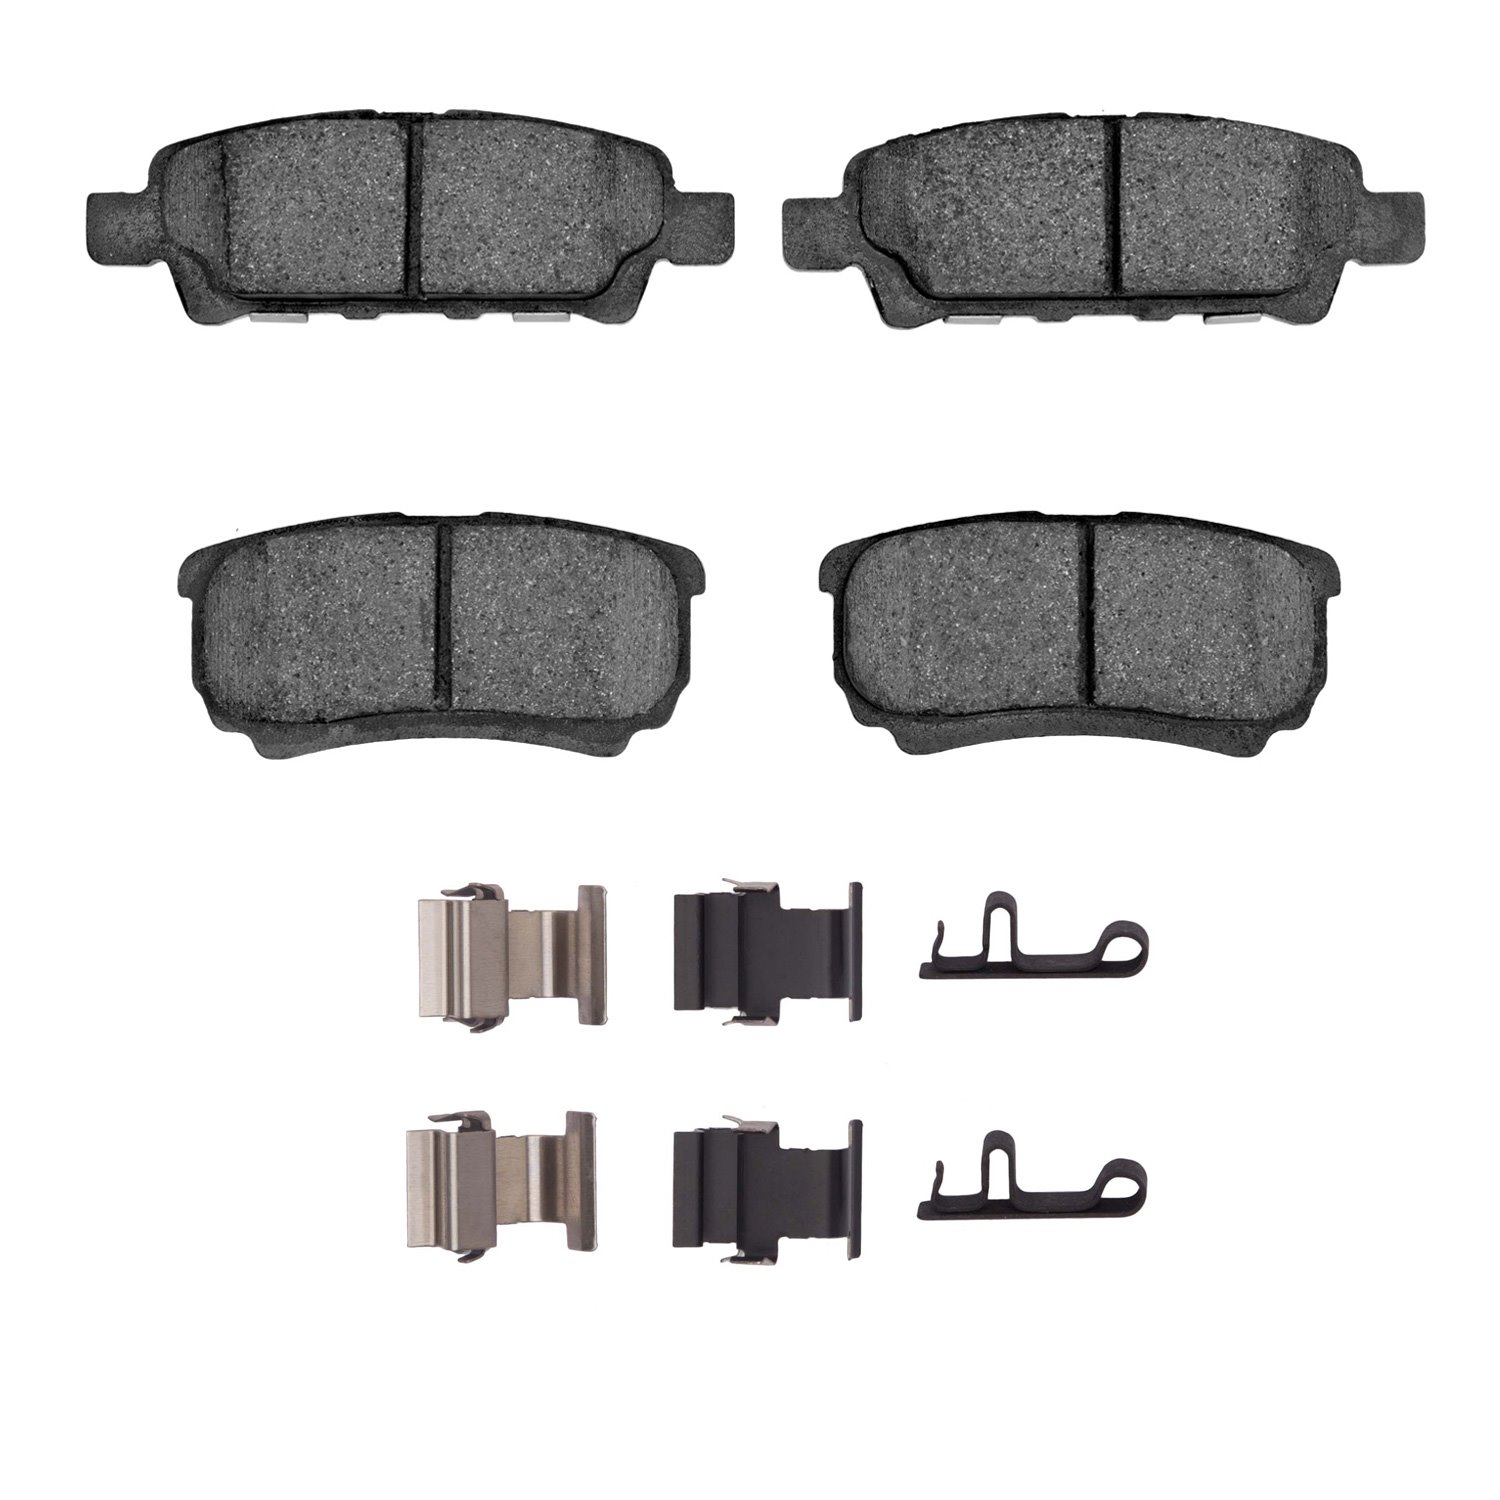 1551-1037-01 5000 Advanced Ceramic Brake Pads & Hardware Kit, 2004-2017 Multiple Makes/Models, Position: Rear